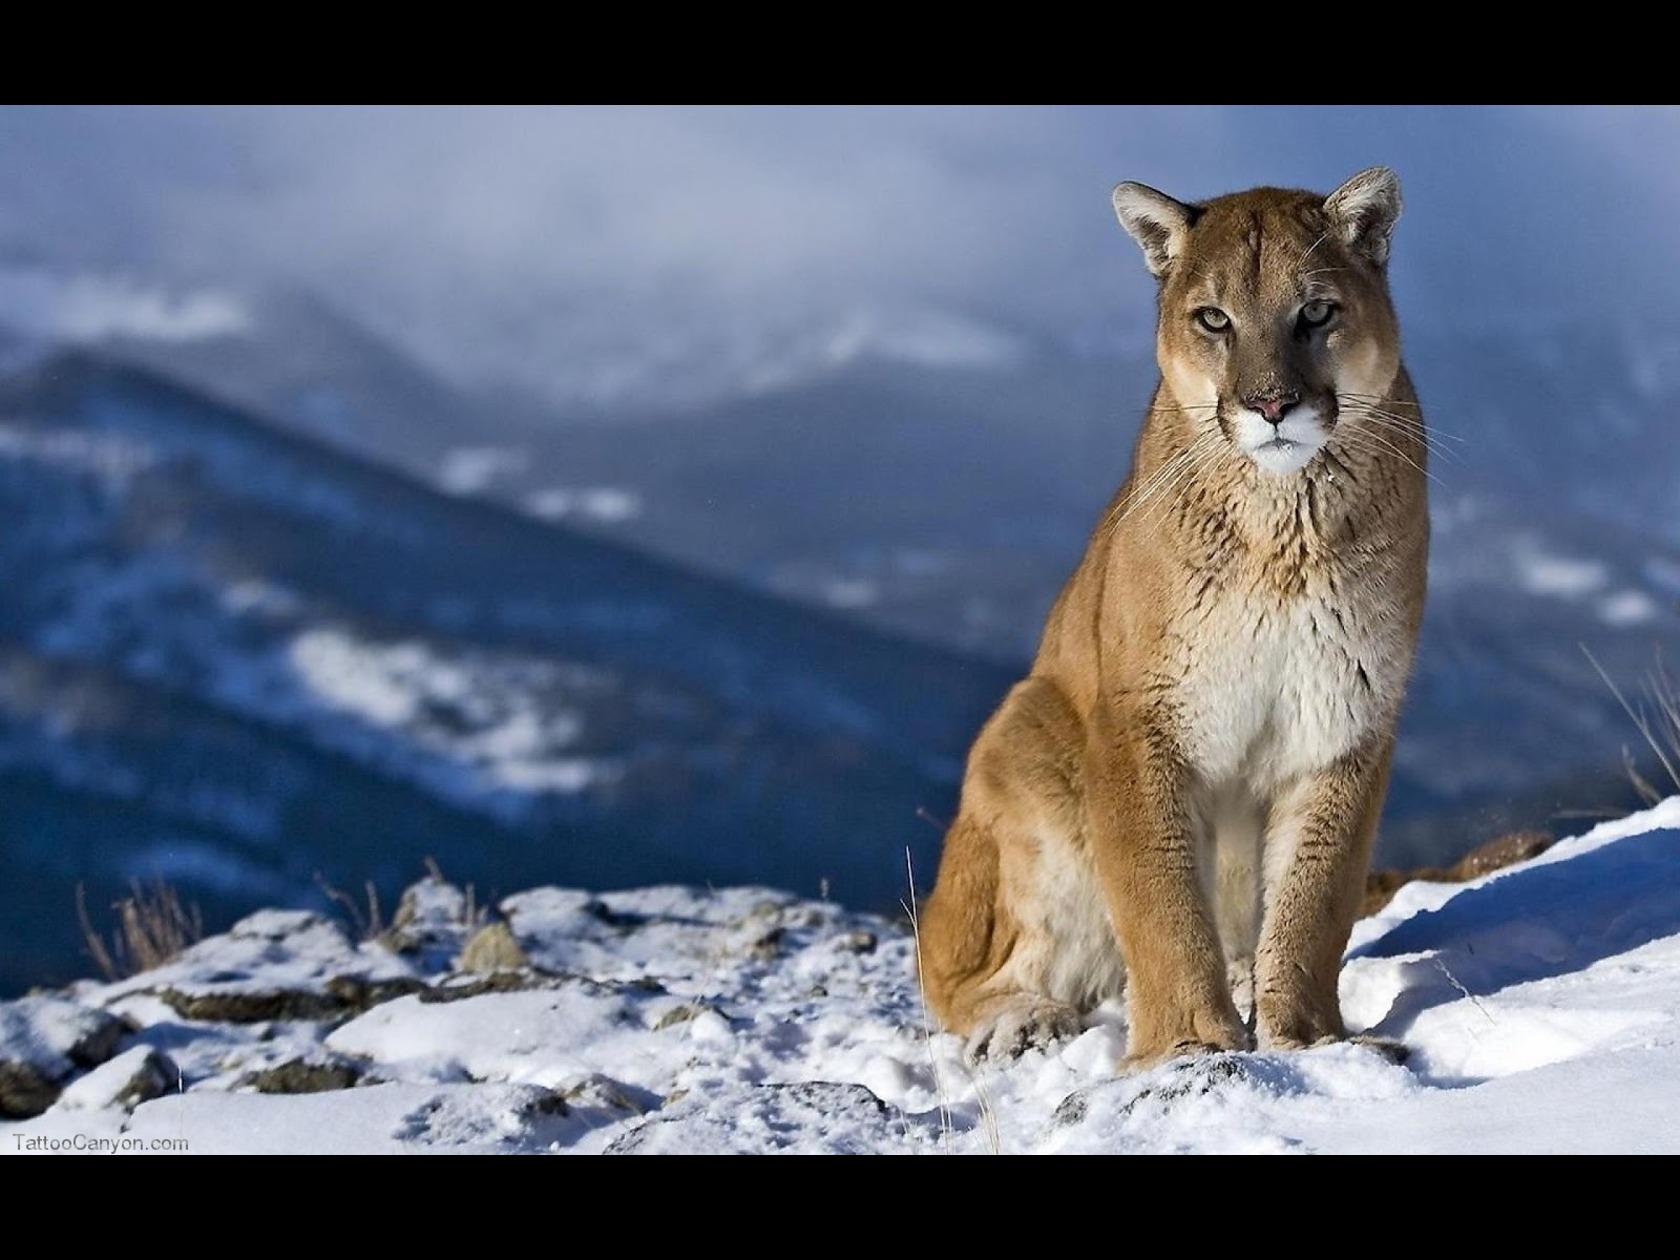 os x mountain lion wallpaper,mammal,vertebrate,wildlife,puma,cougar